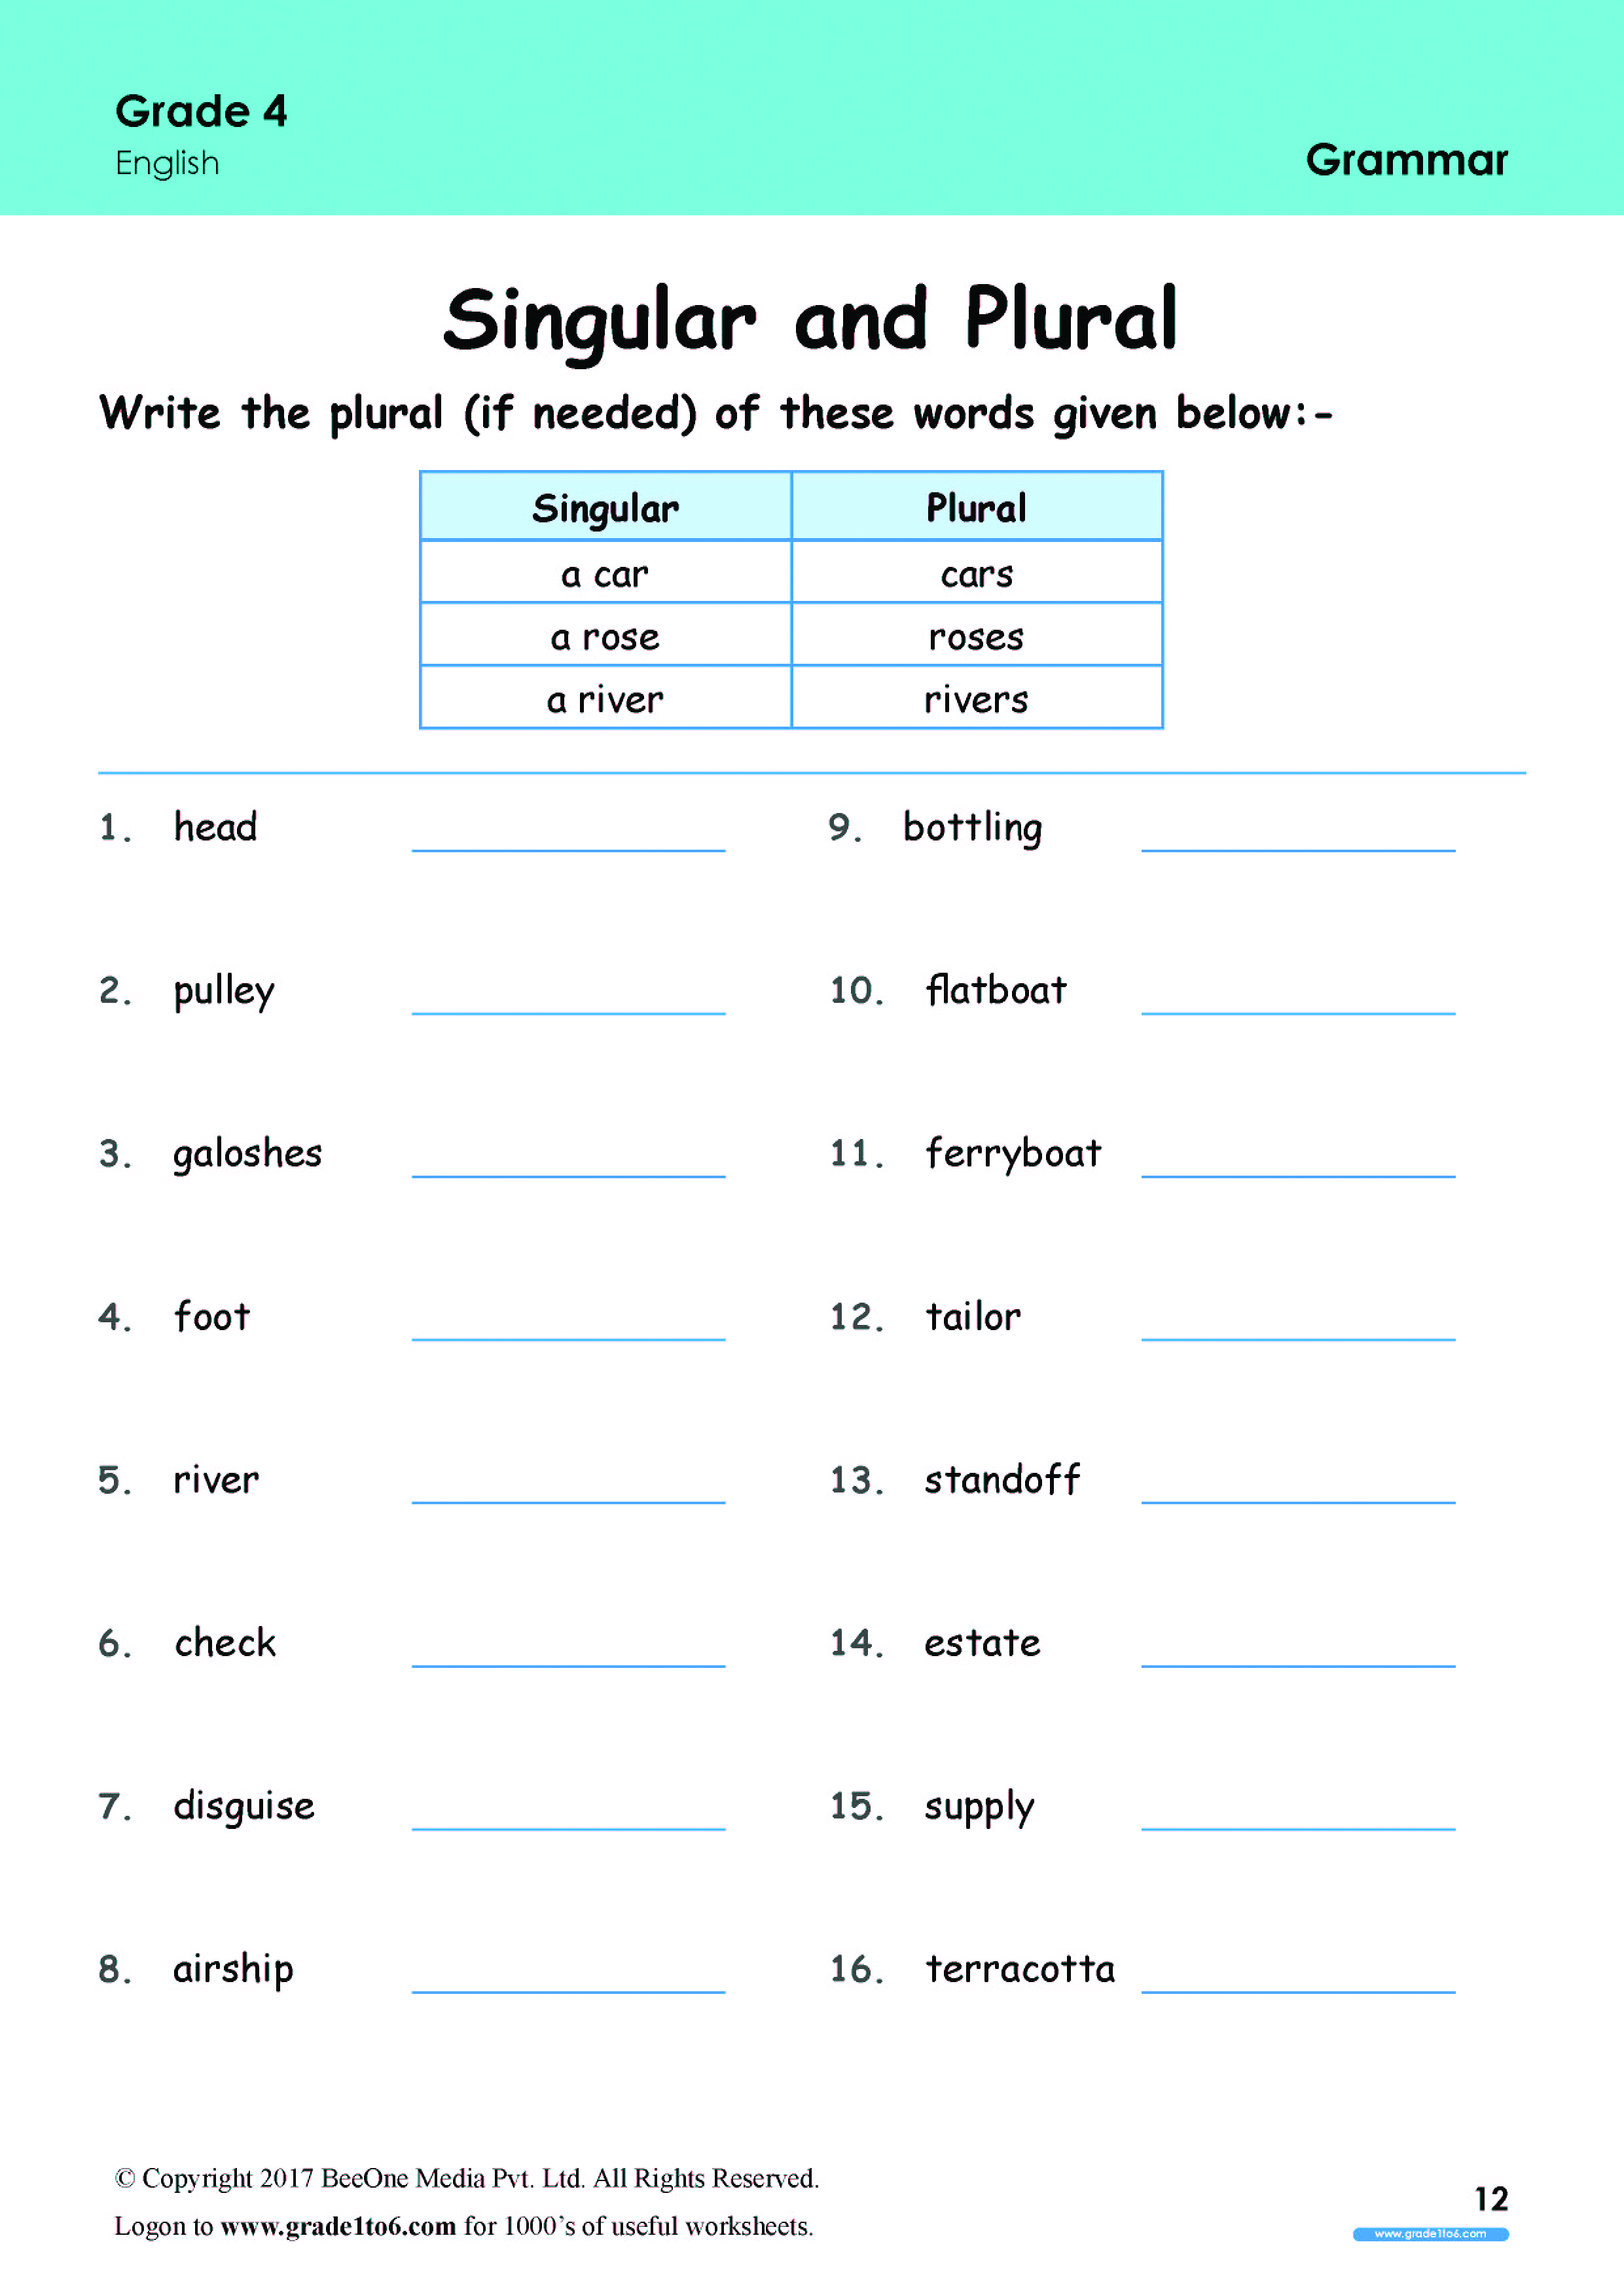 singular-plural-worksheets-for-grade-4-www-grade1to6